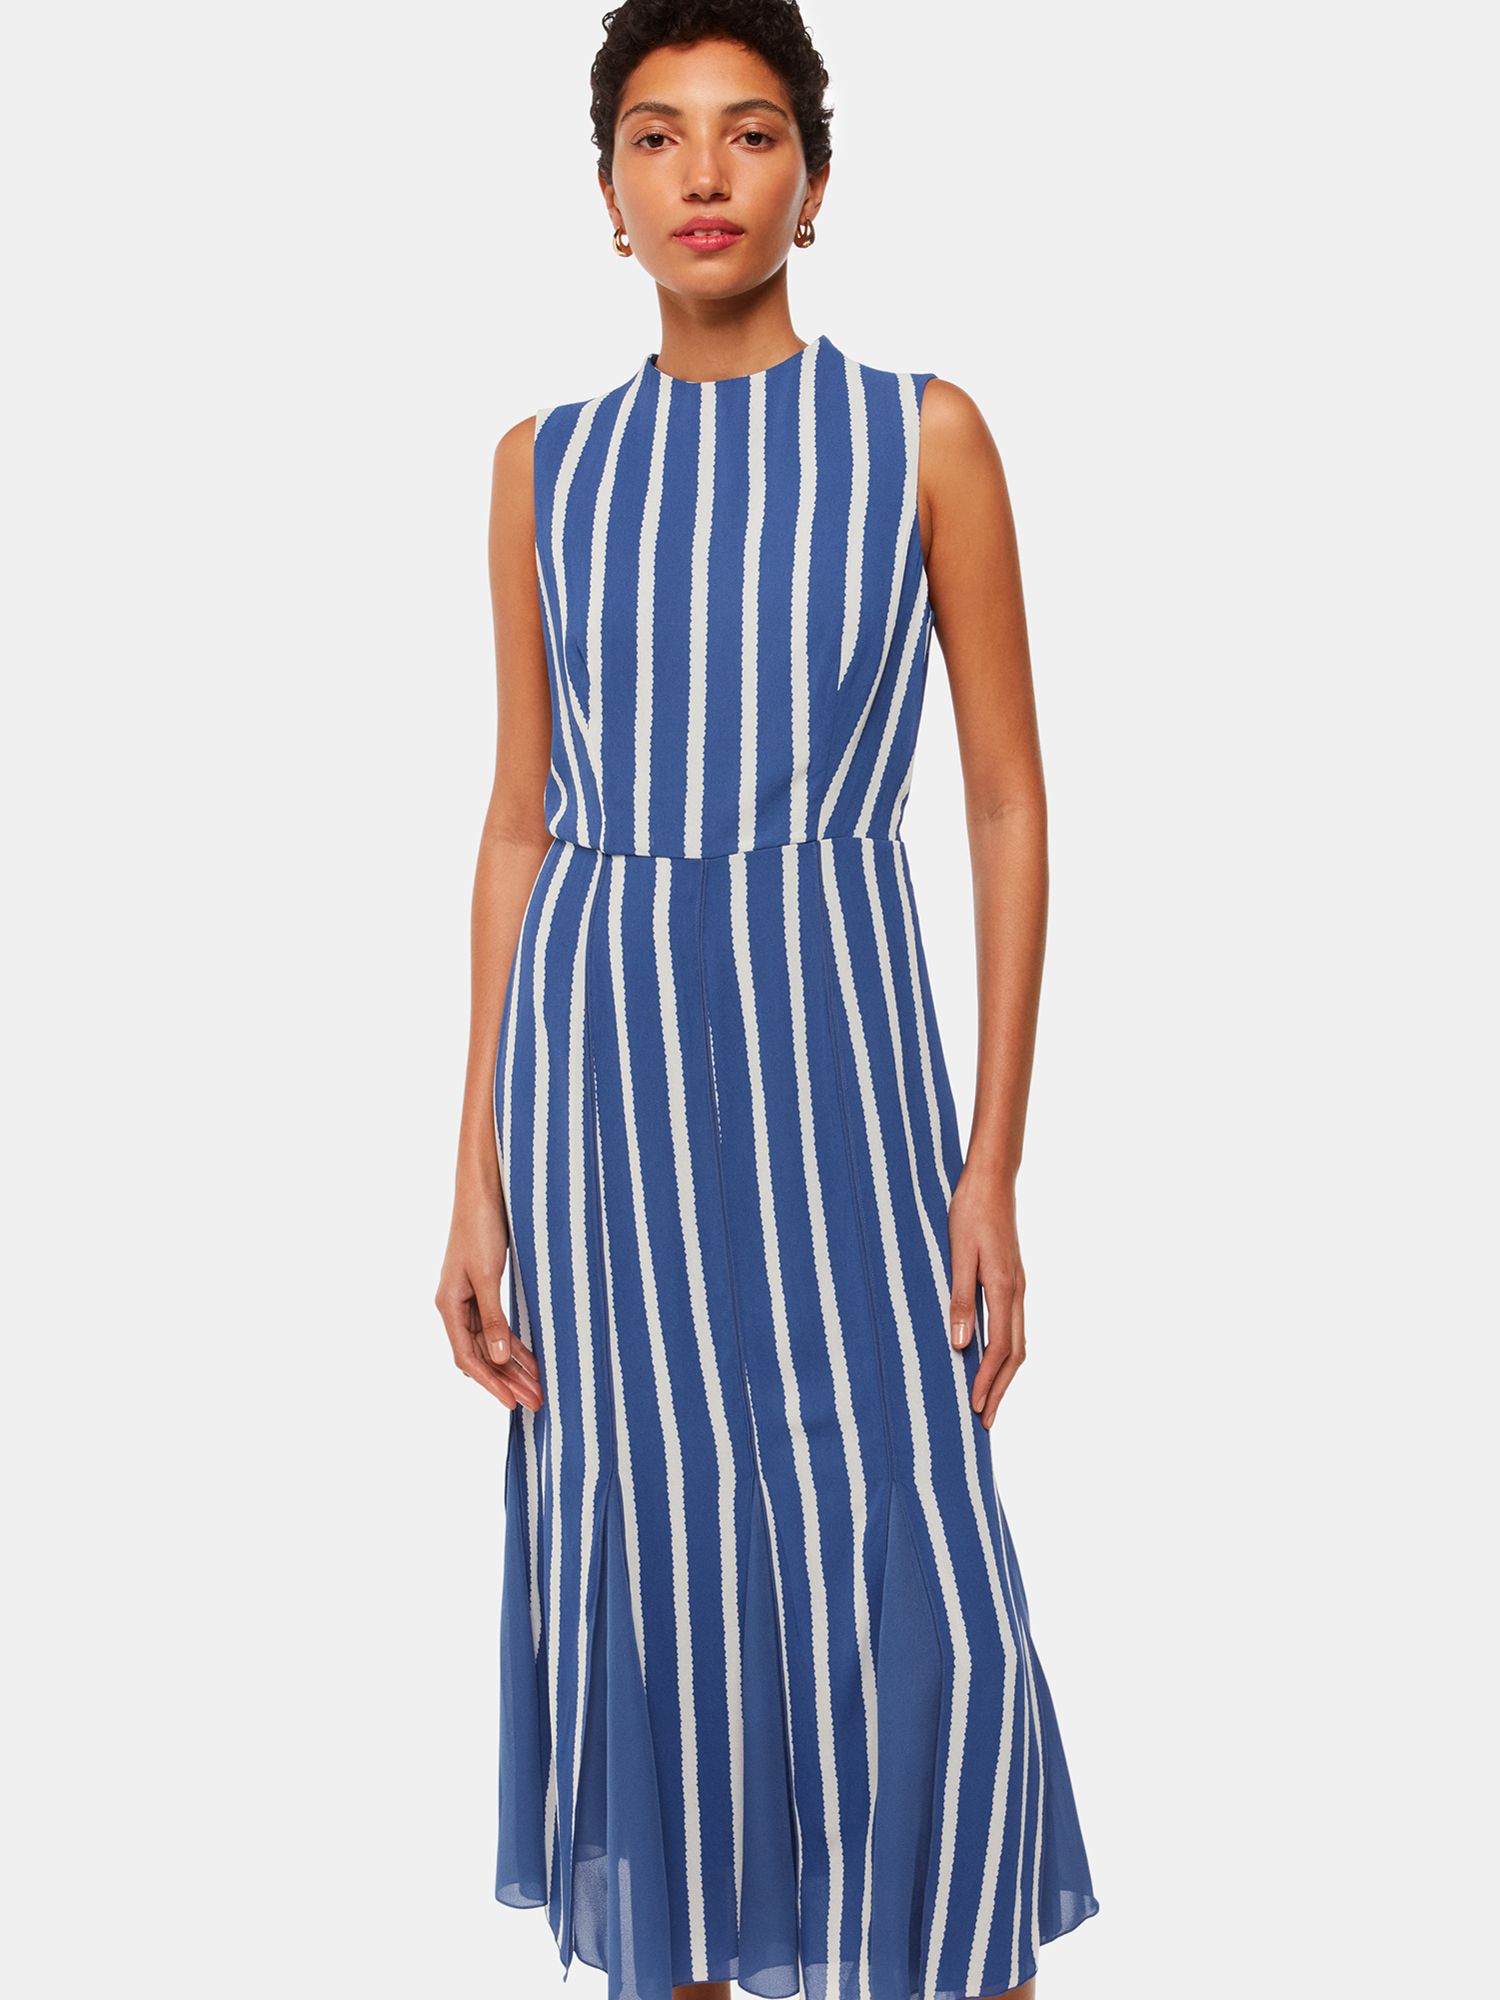 Whistles Crinkle Stripe Midi Dress, Blue/White, 6